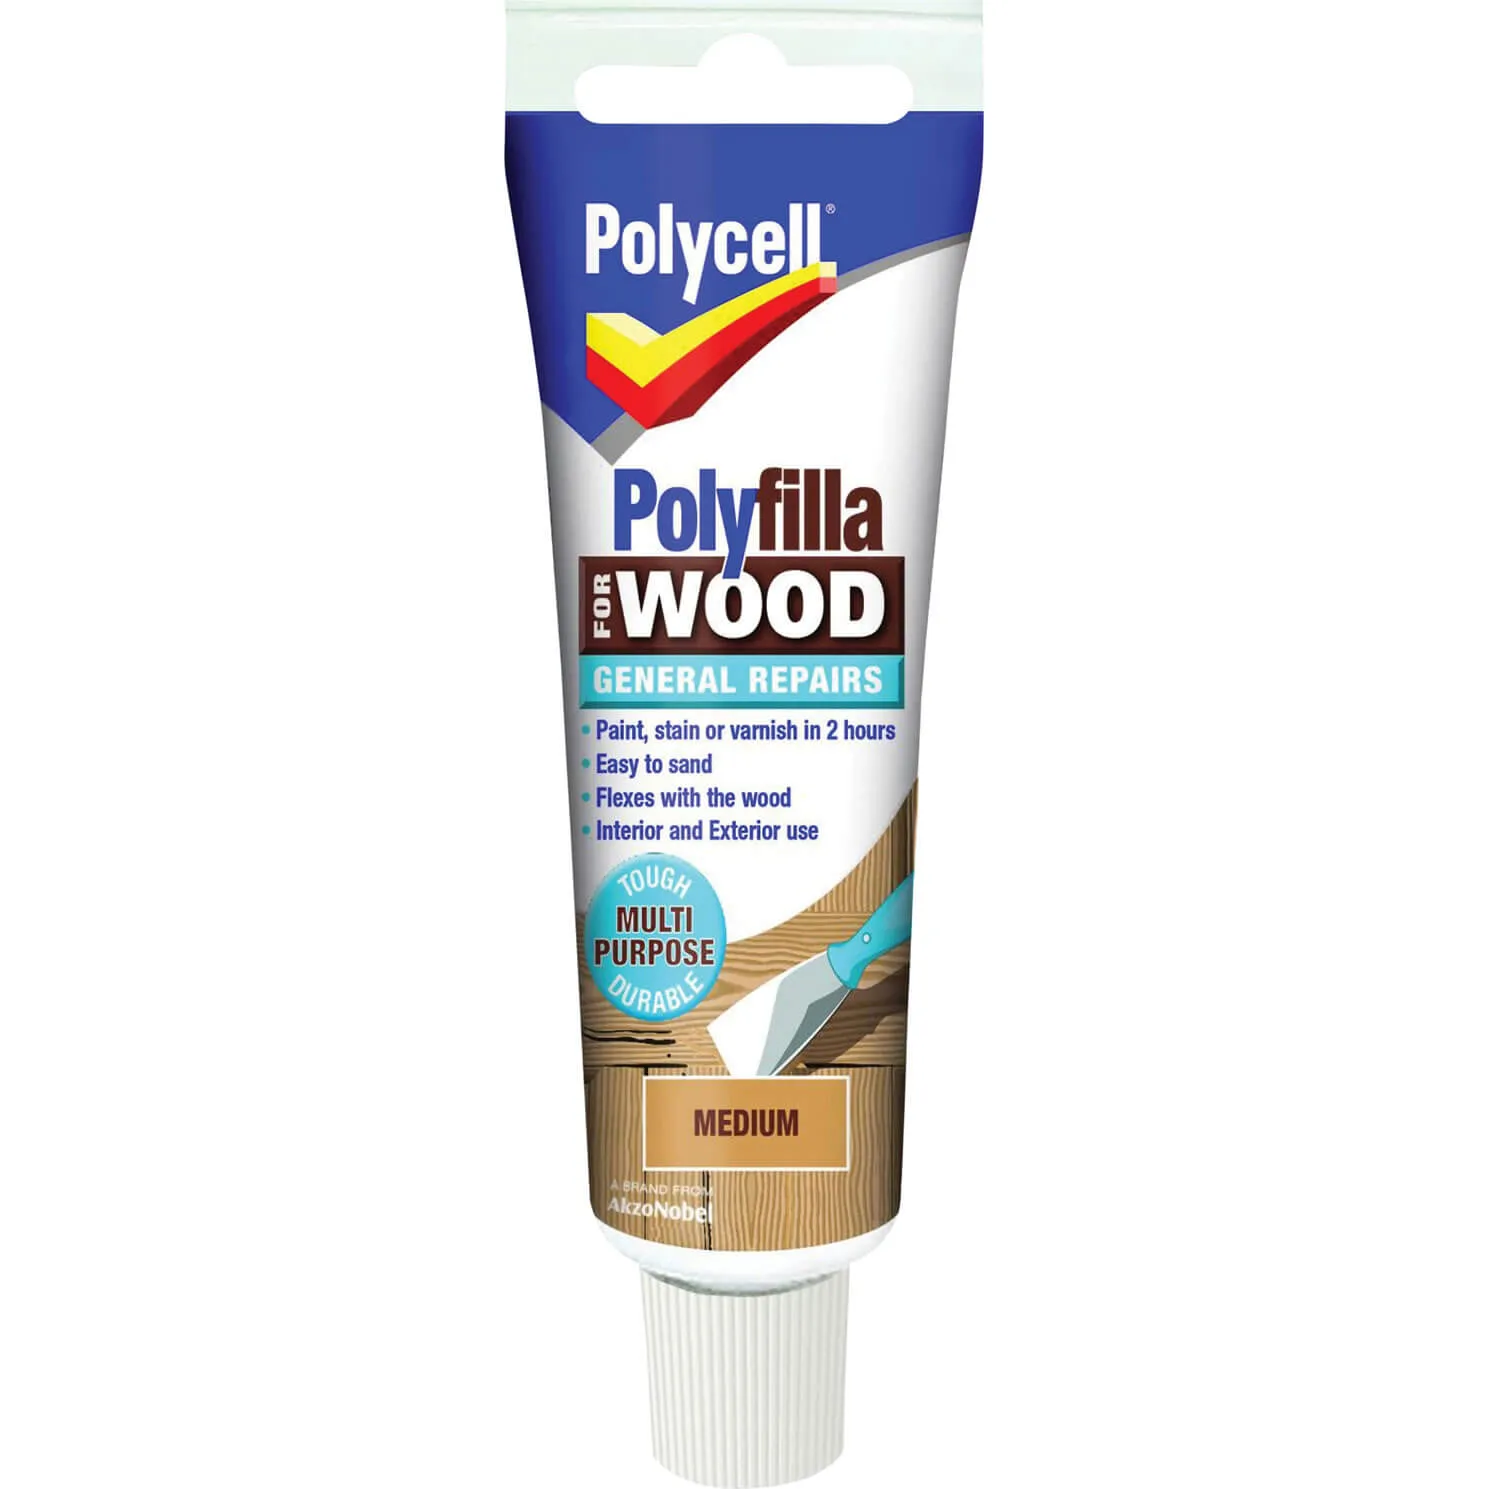 Polycell Polyfilla for Wood General Repairs - Medium, 330g